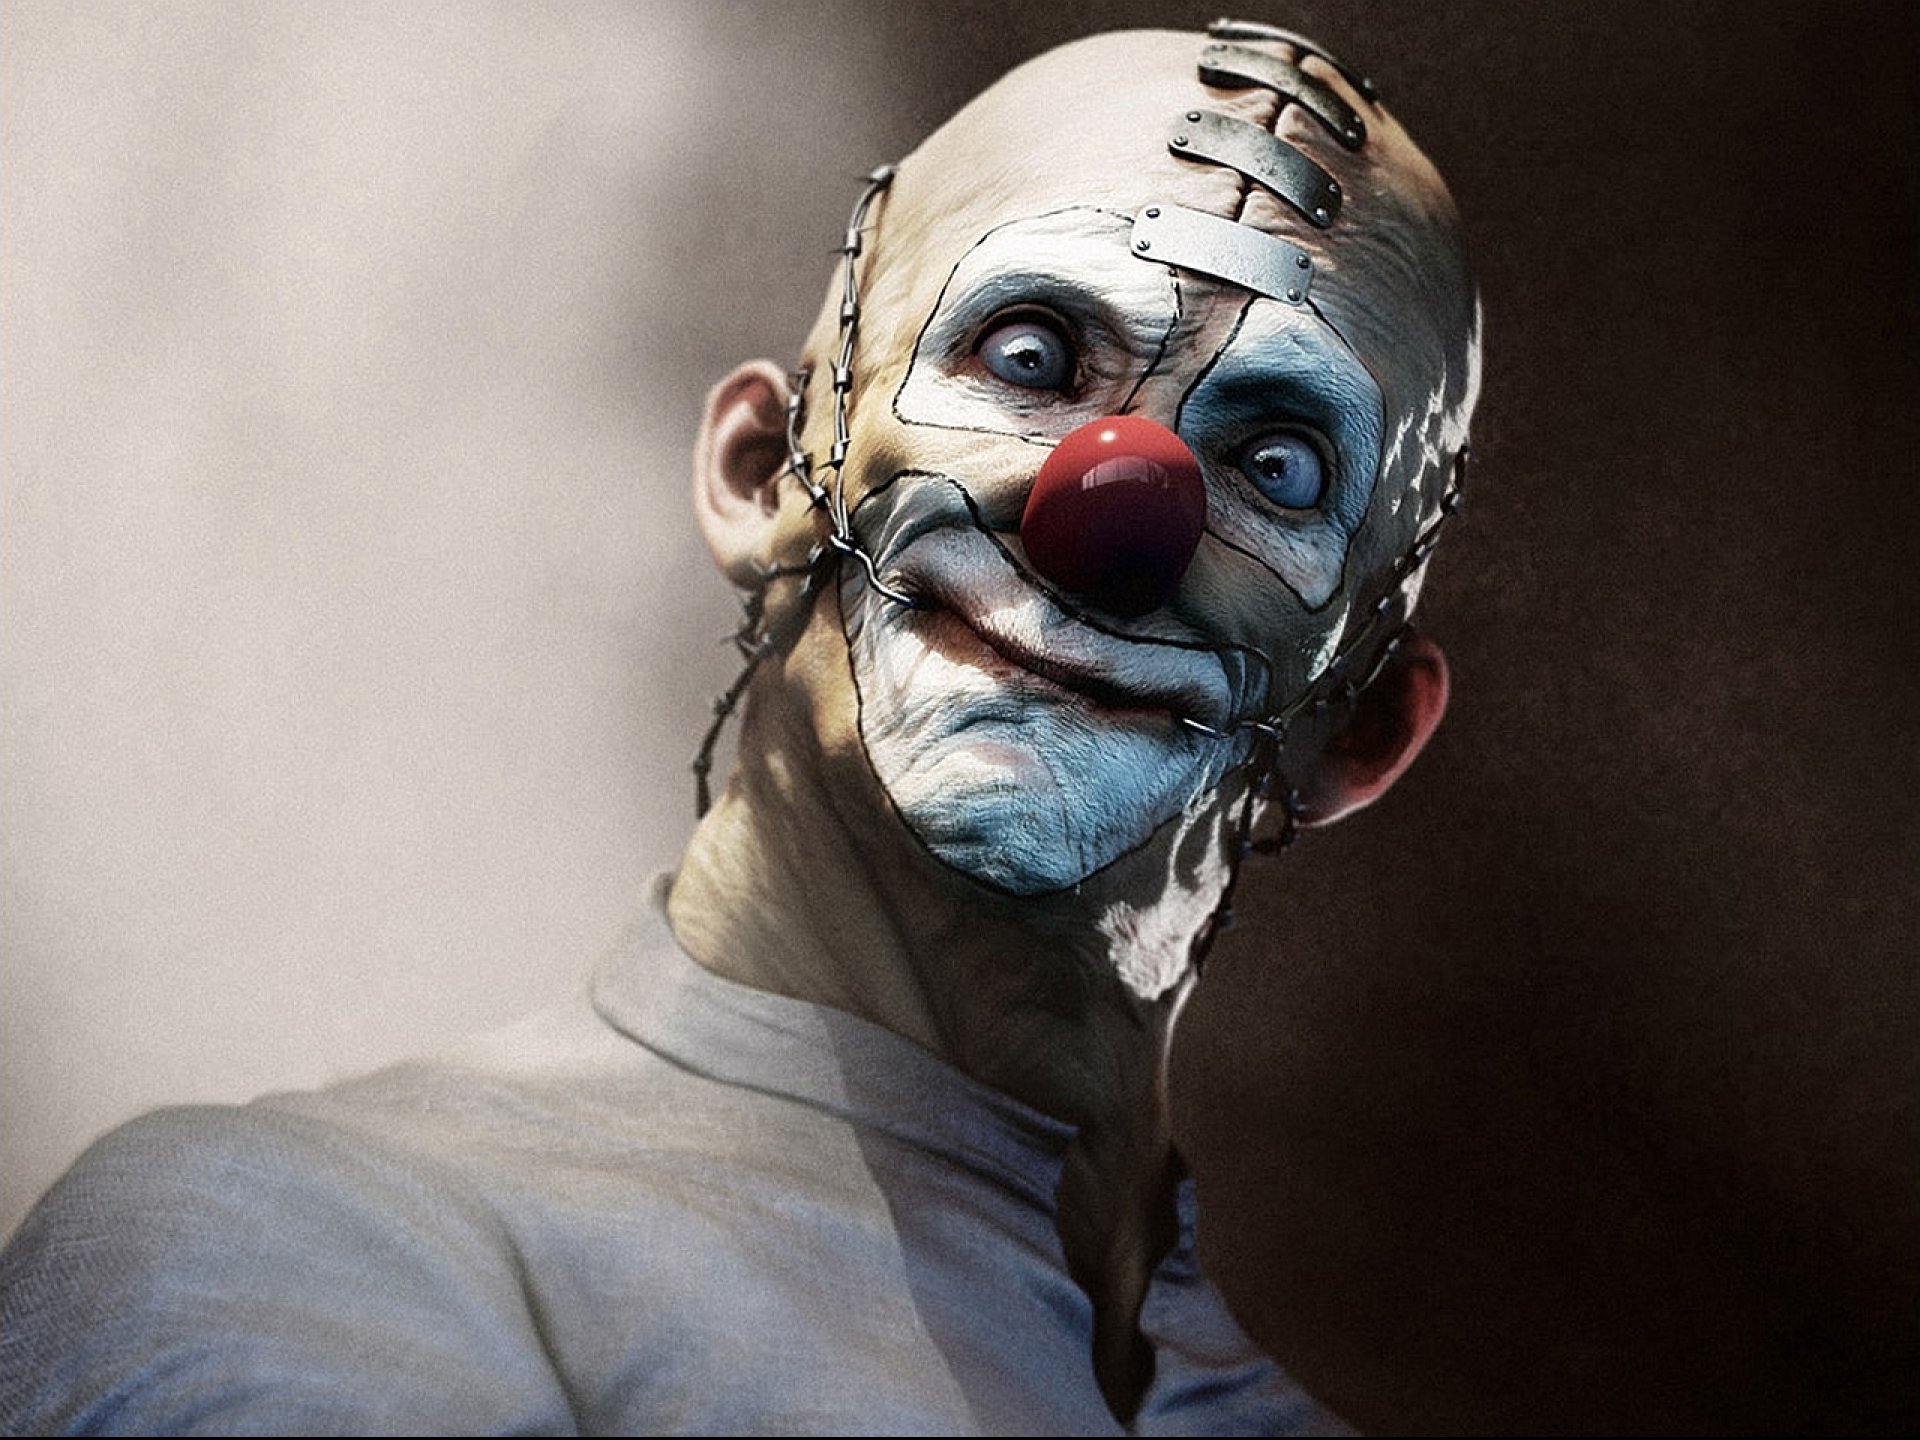 Dark Horror Evil Clown Art Artwork F Wallpaper